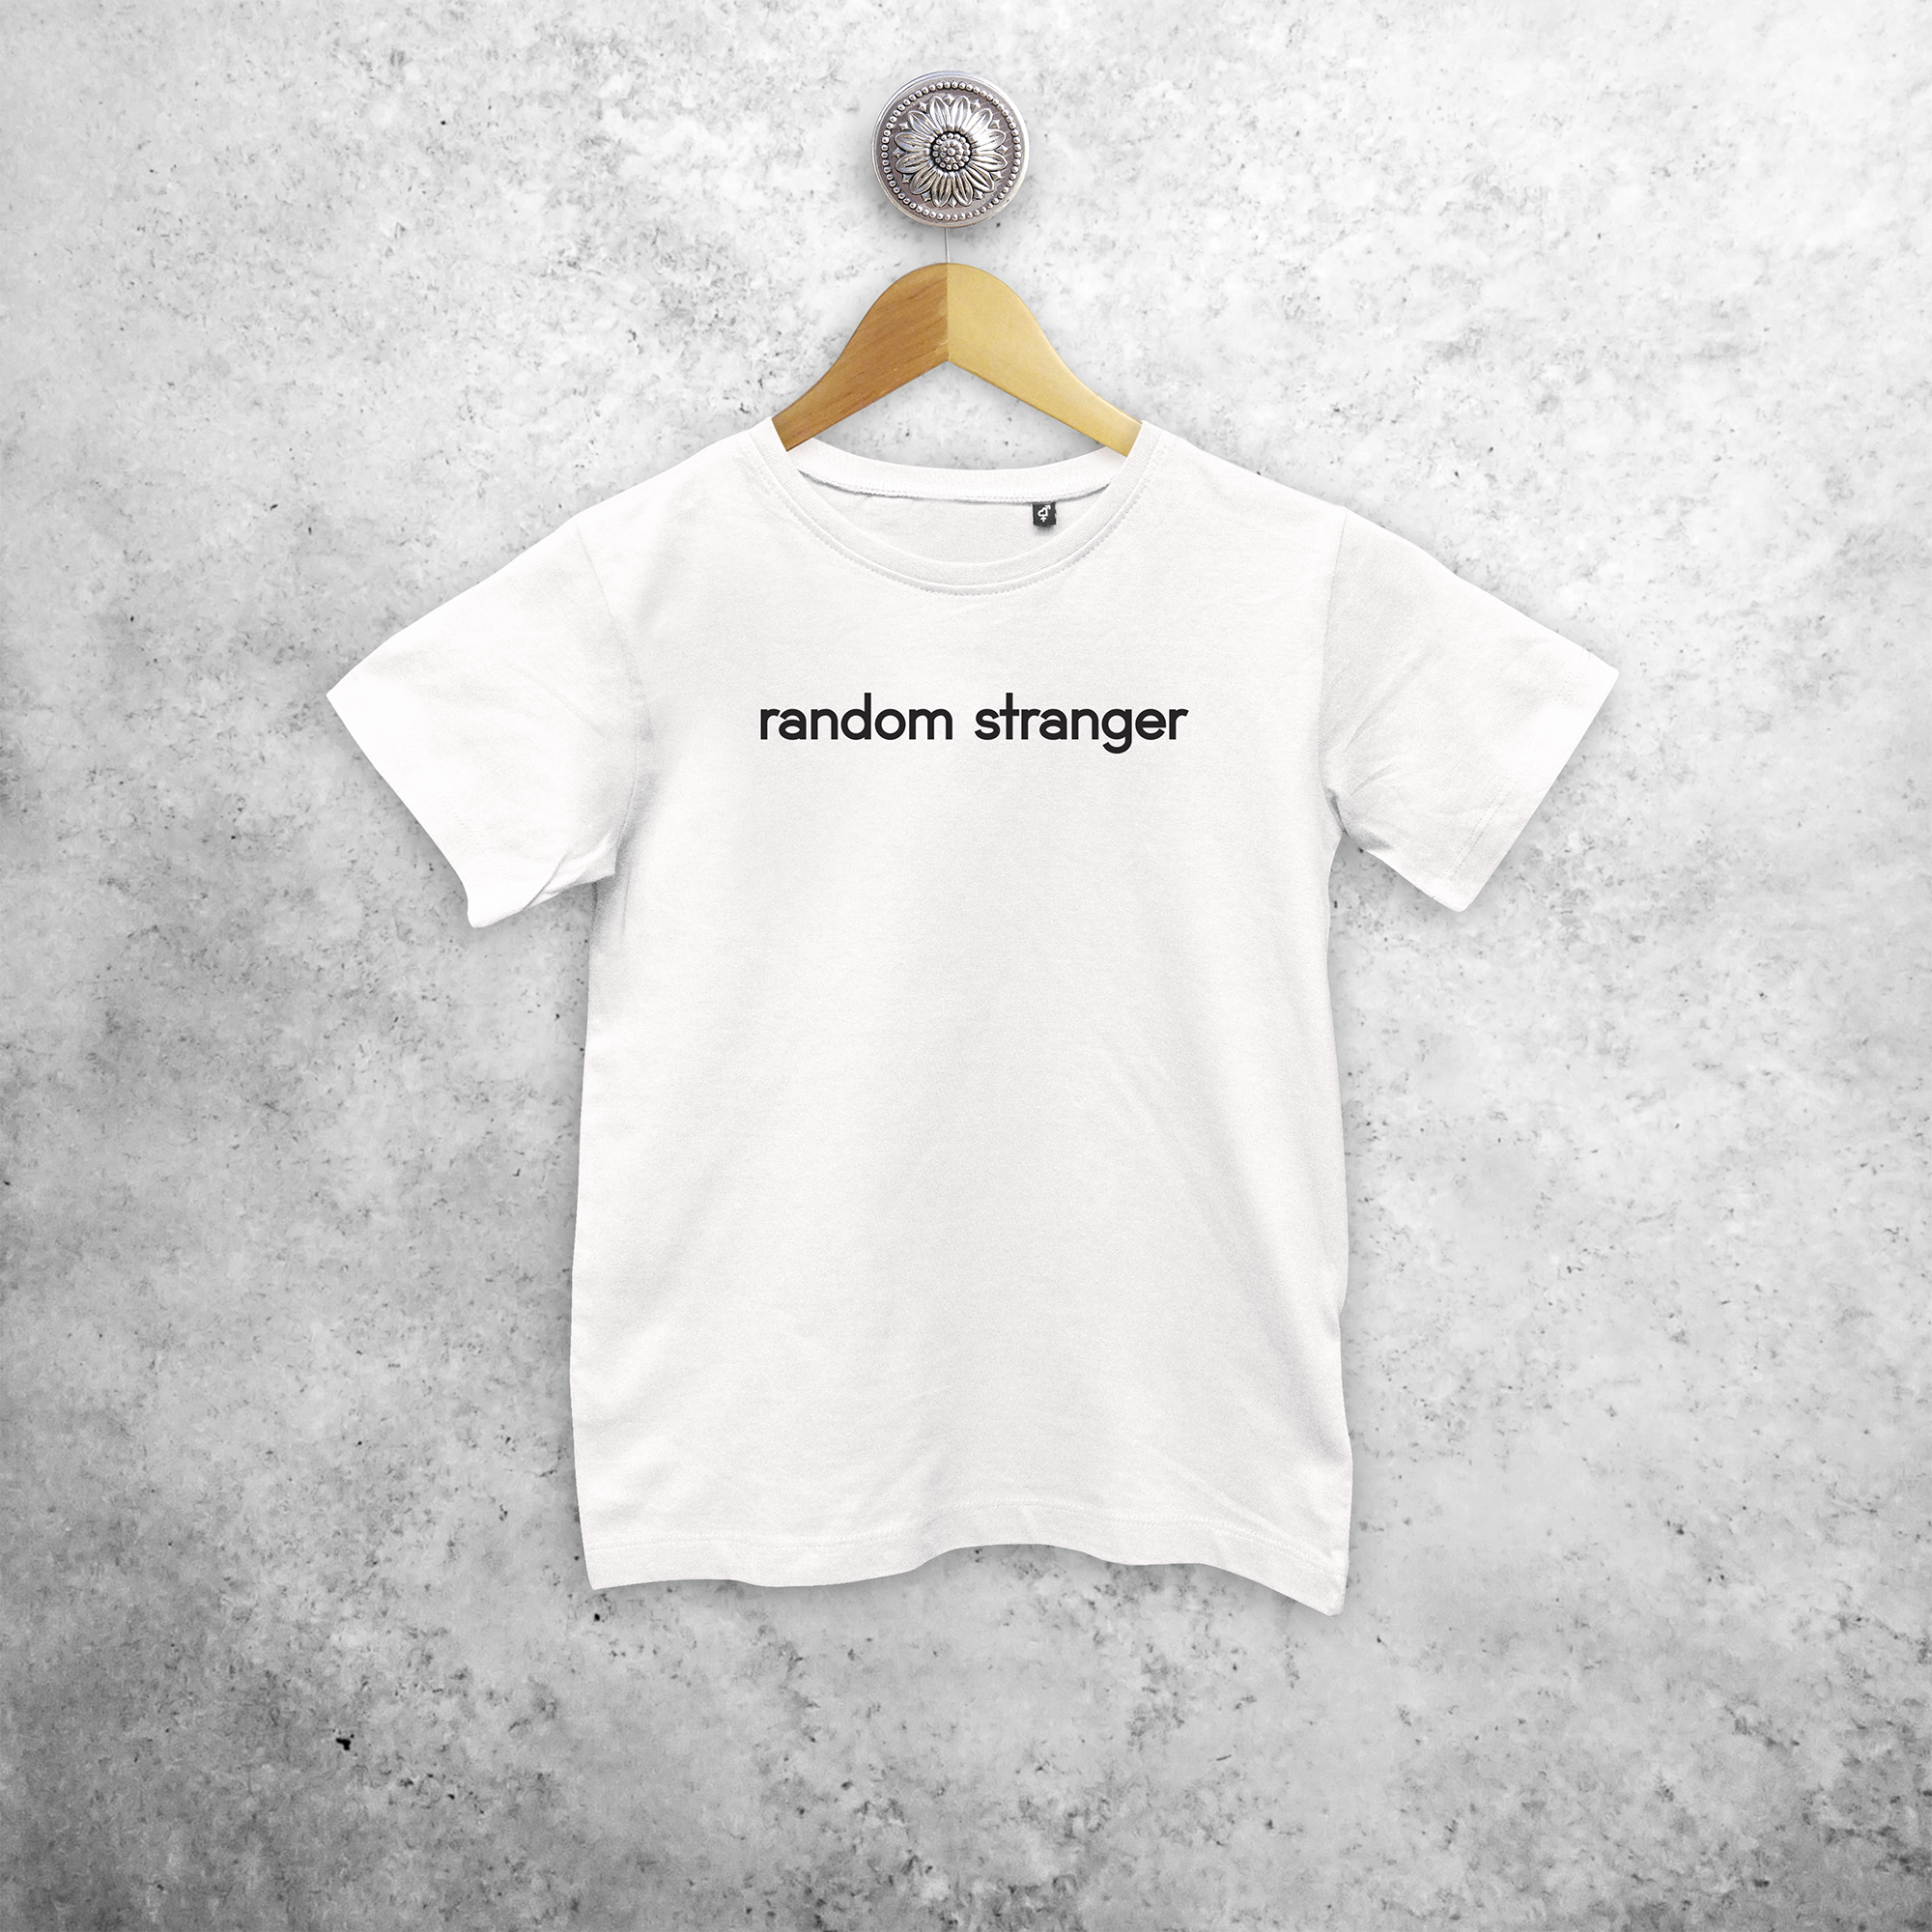 'Random stranger' kids shortsleeve shirt